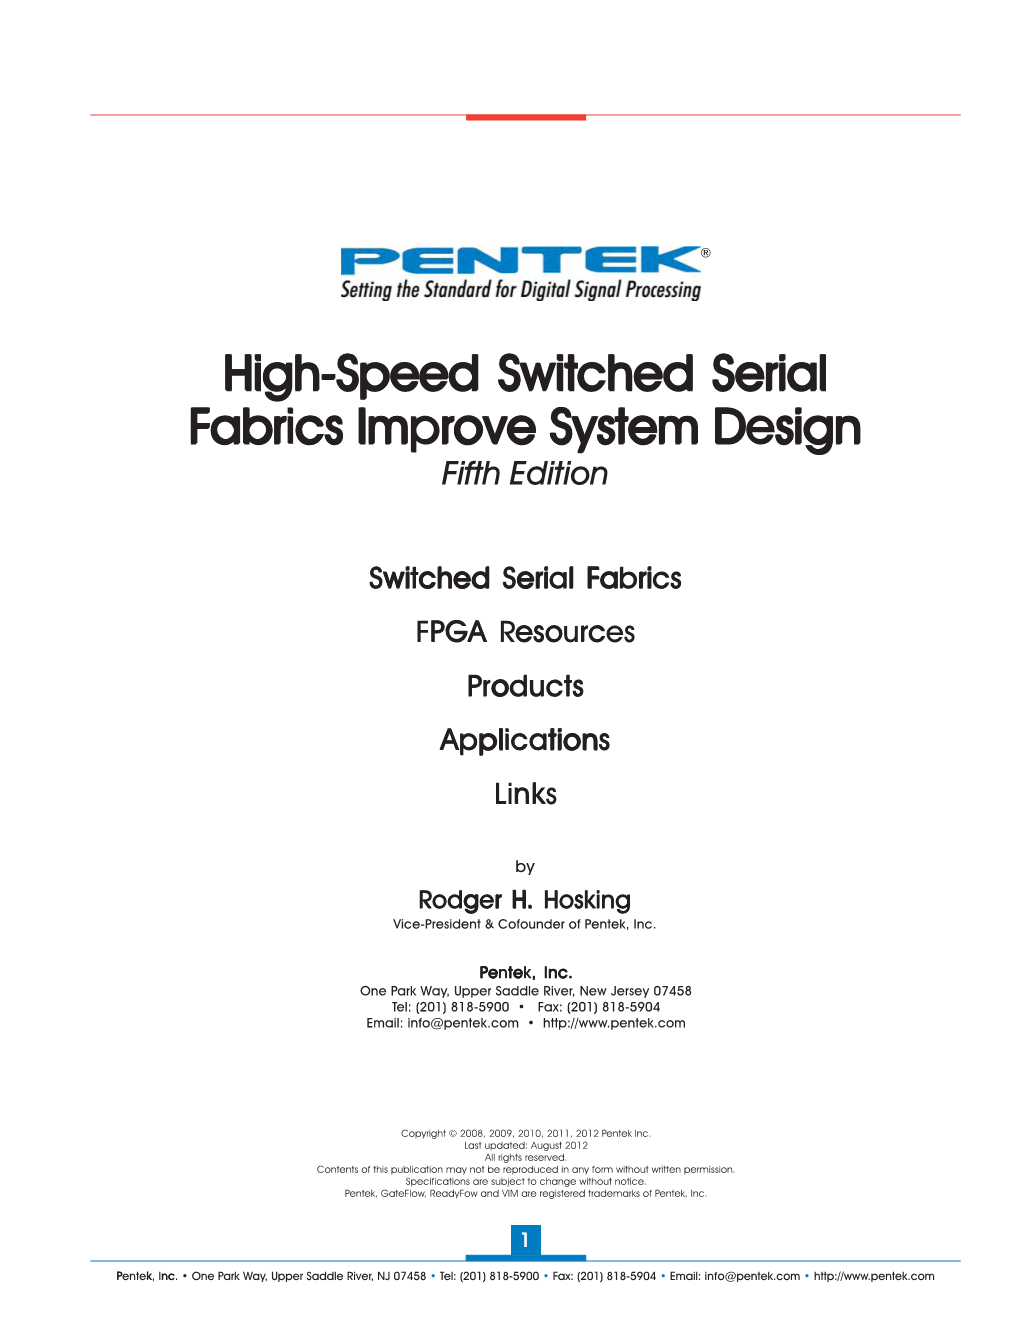 High-Speed Serial Fabrics Improve System Design